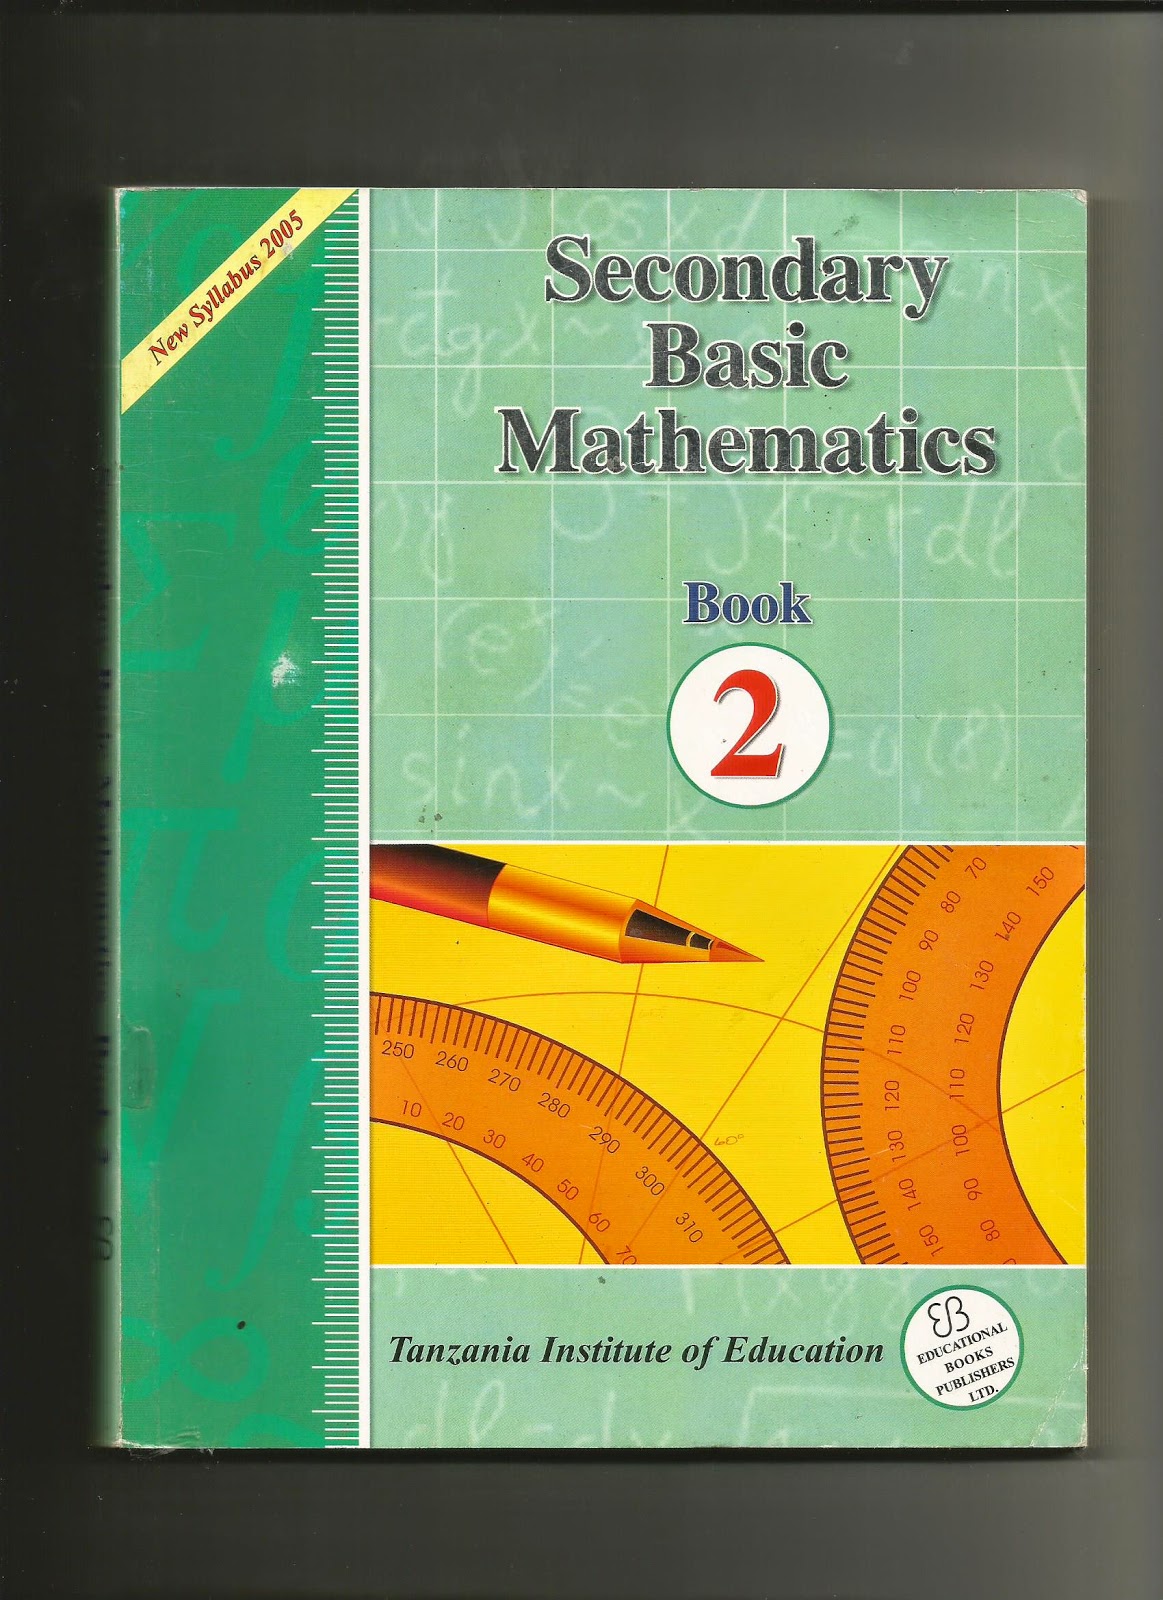 mwl-japhet-masatu-blog-secondary-basic-mathematics-book-two-tanzania-institute-of